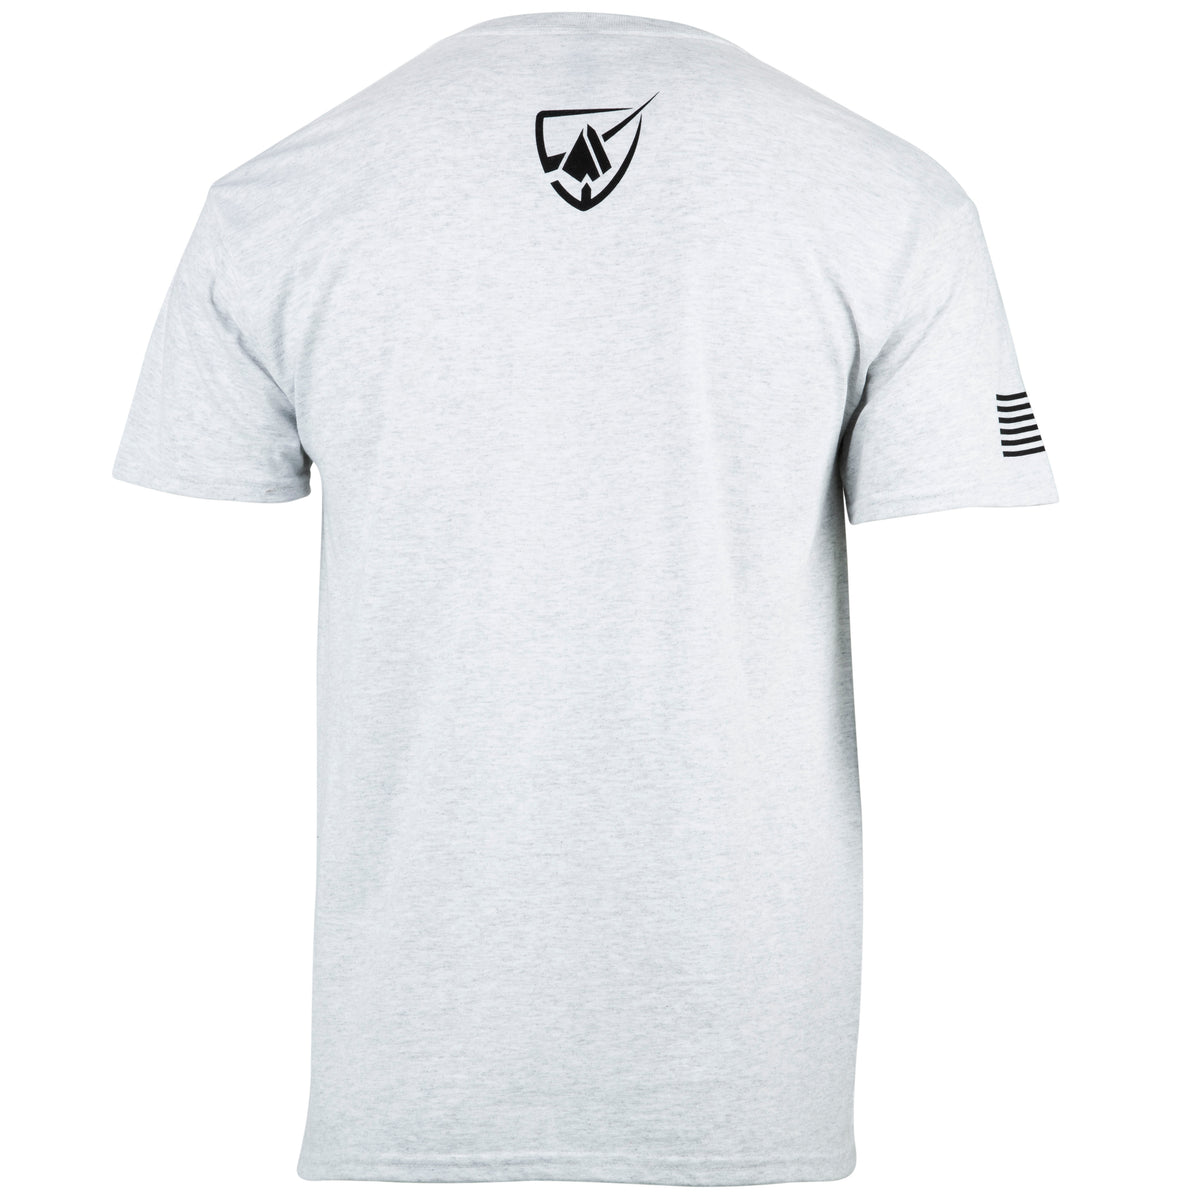 Short Sleeve VIP T-Shirt